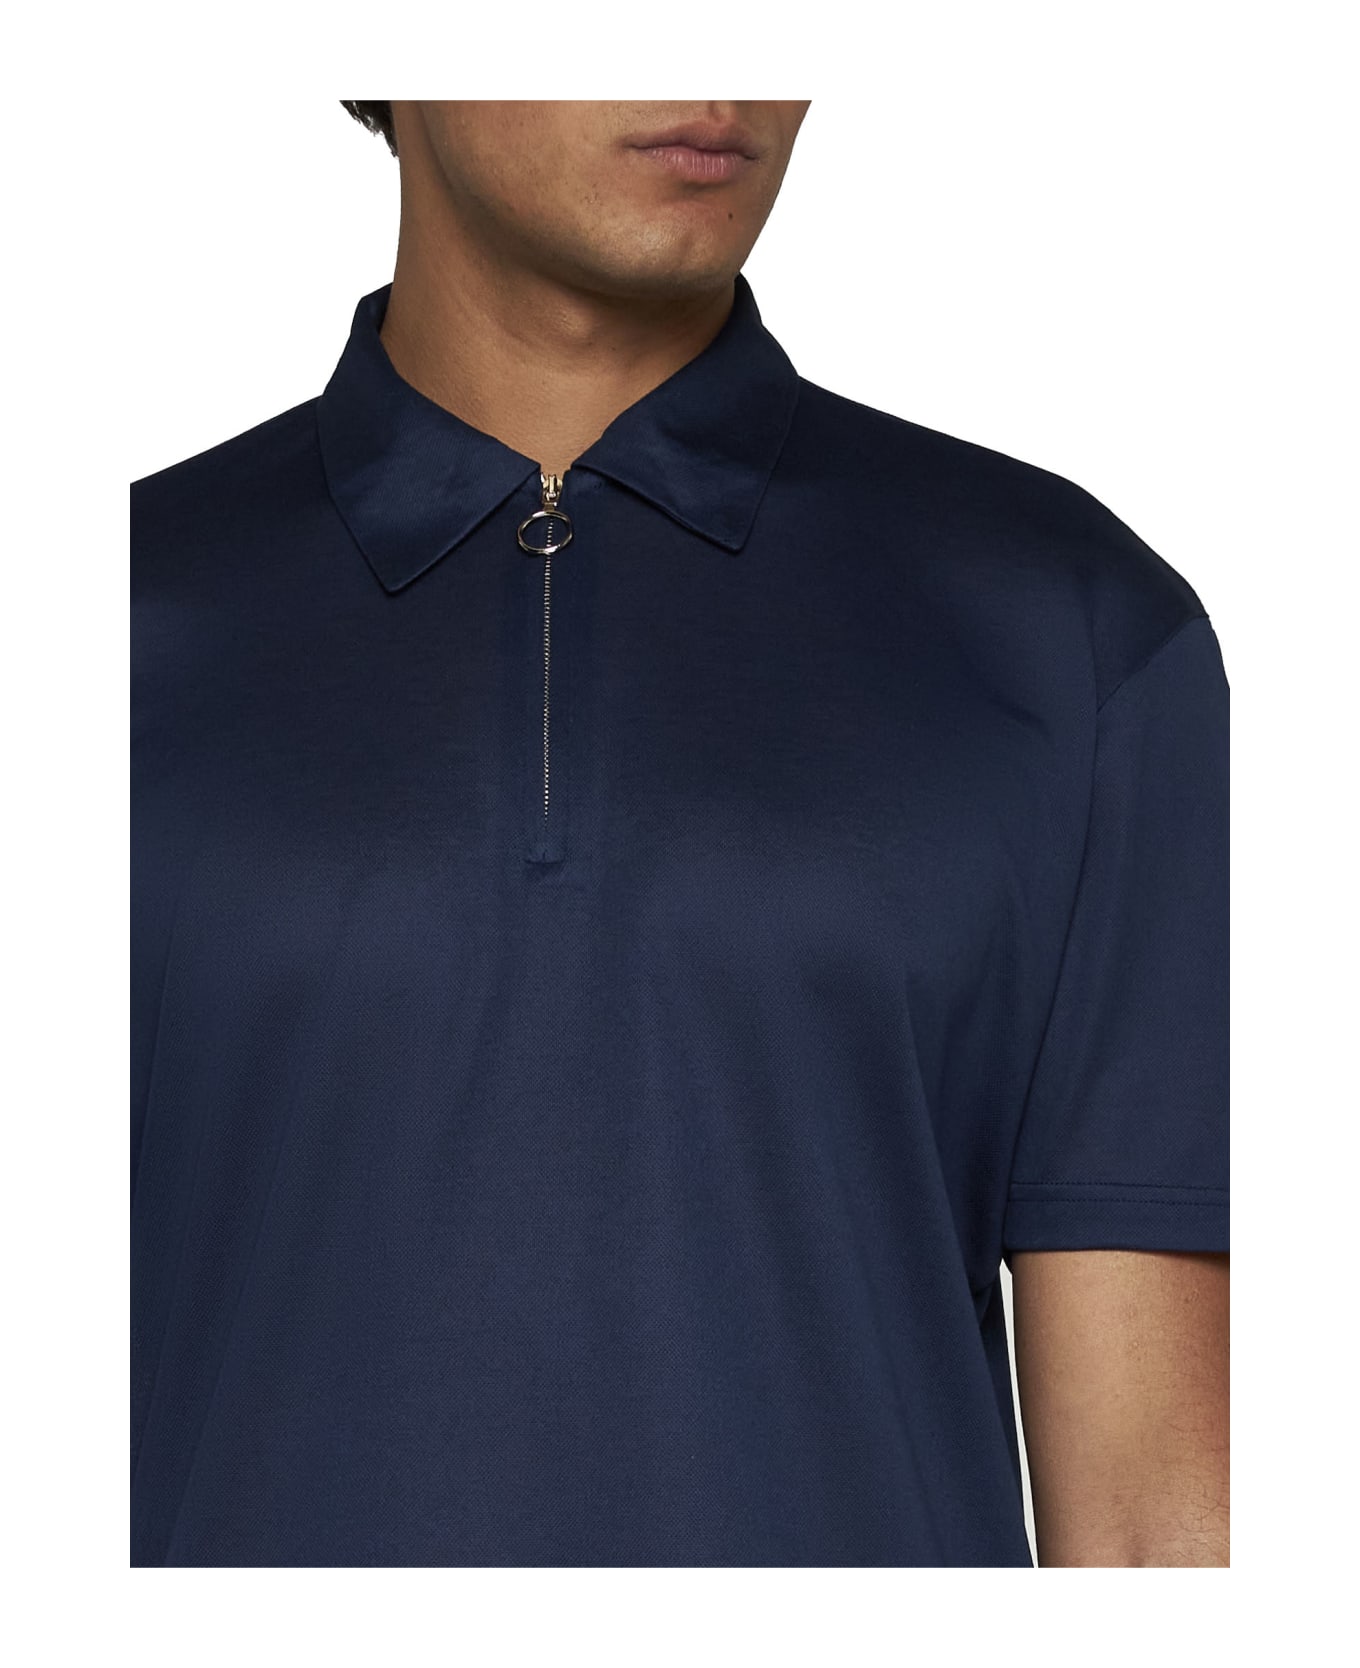 Low Brand Polo Shirt - Dark navy ポロシャツ